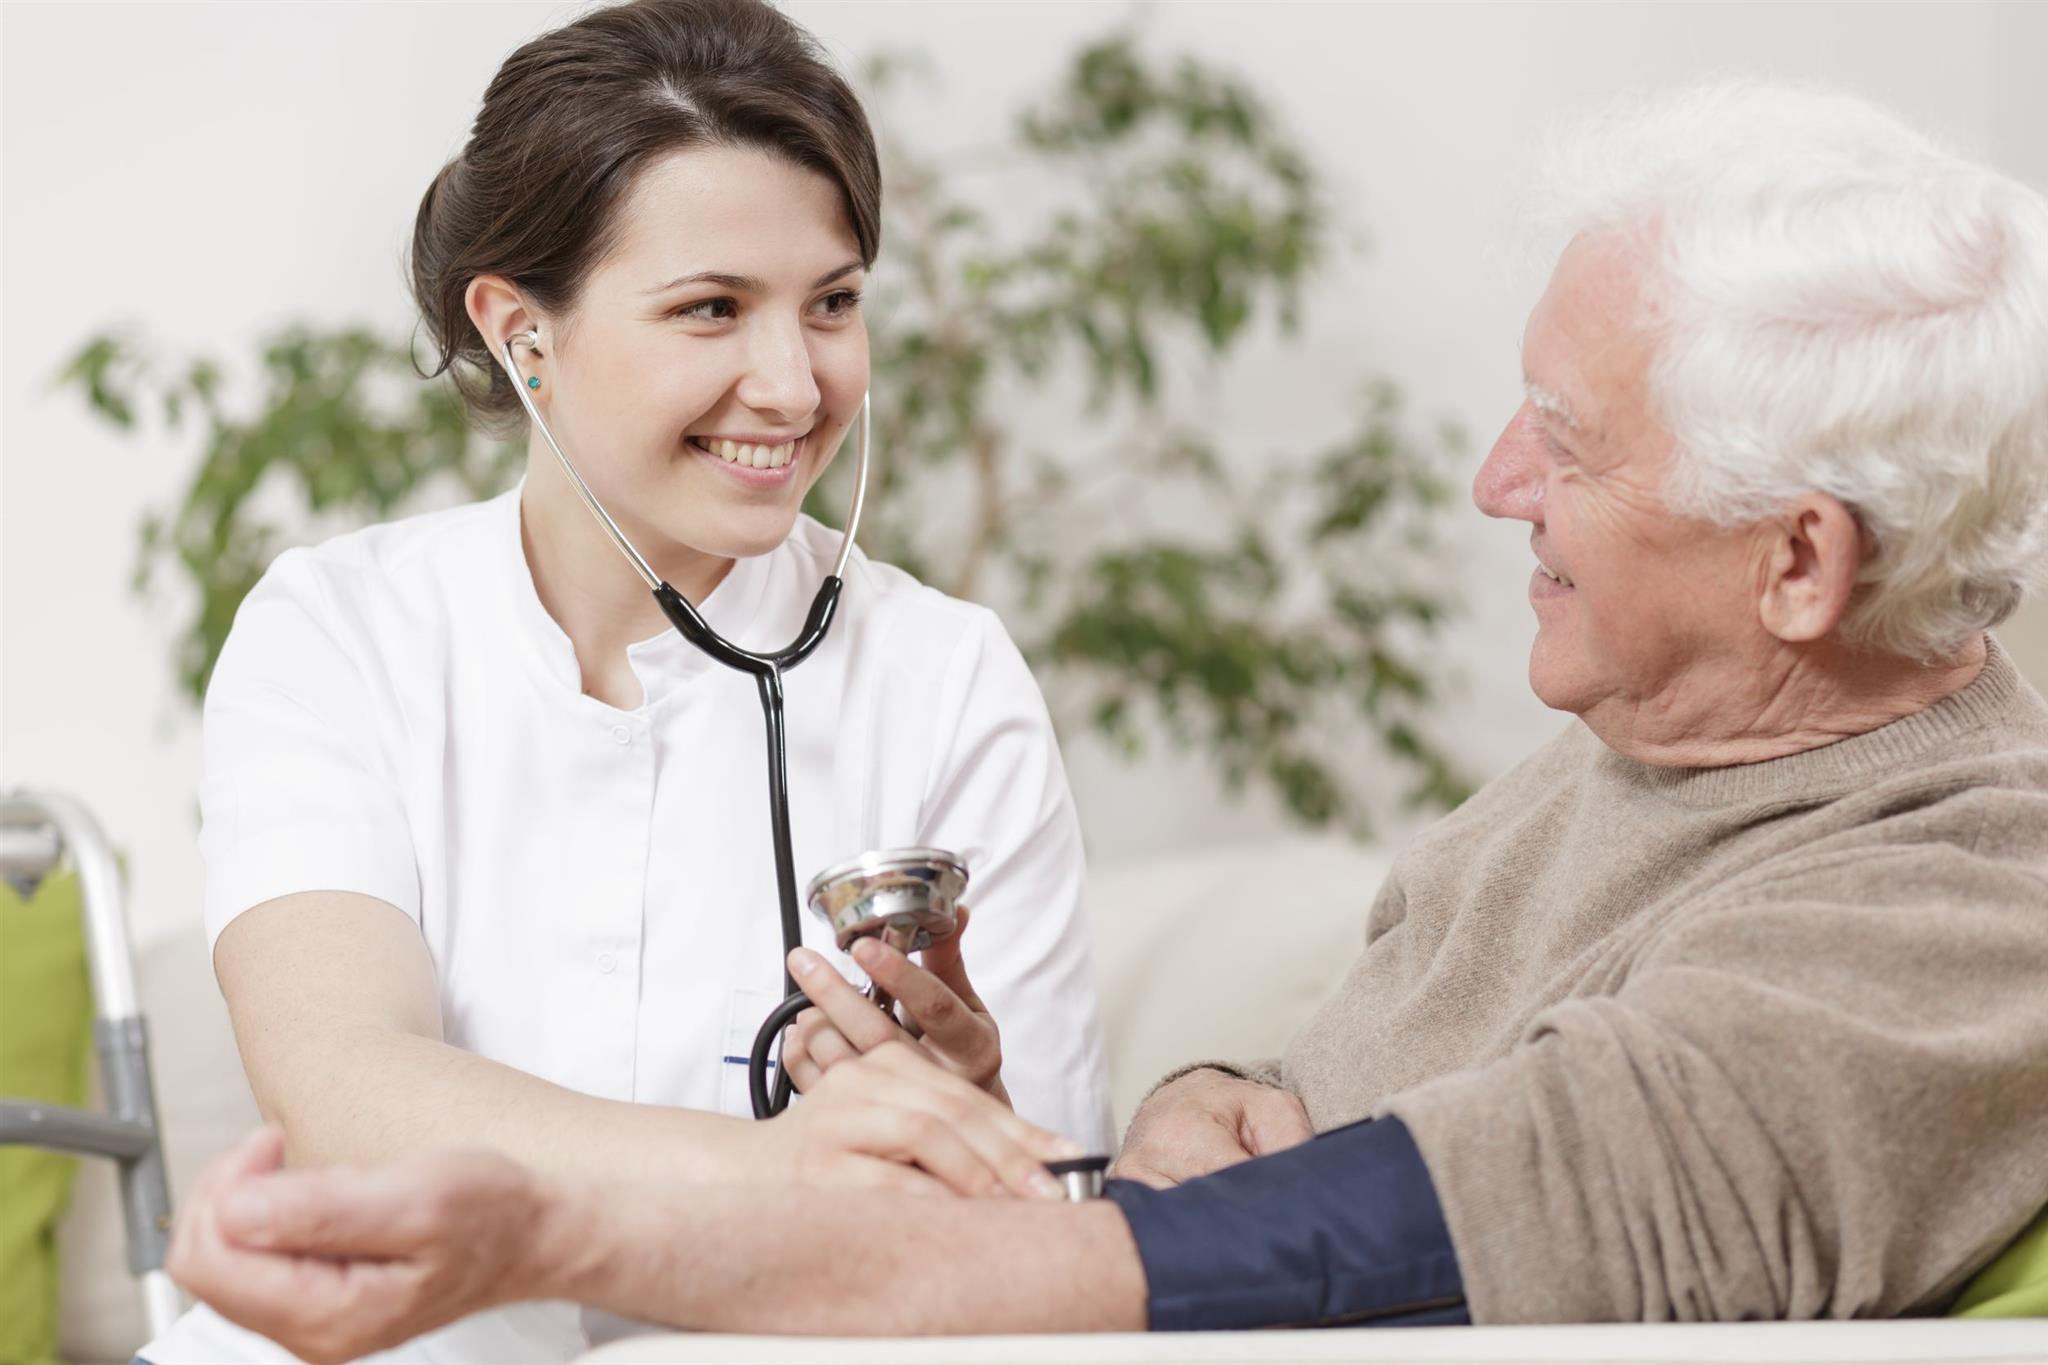 Assistenza infermieristica per anziani, malati e disabili